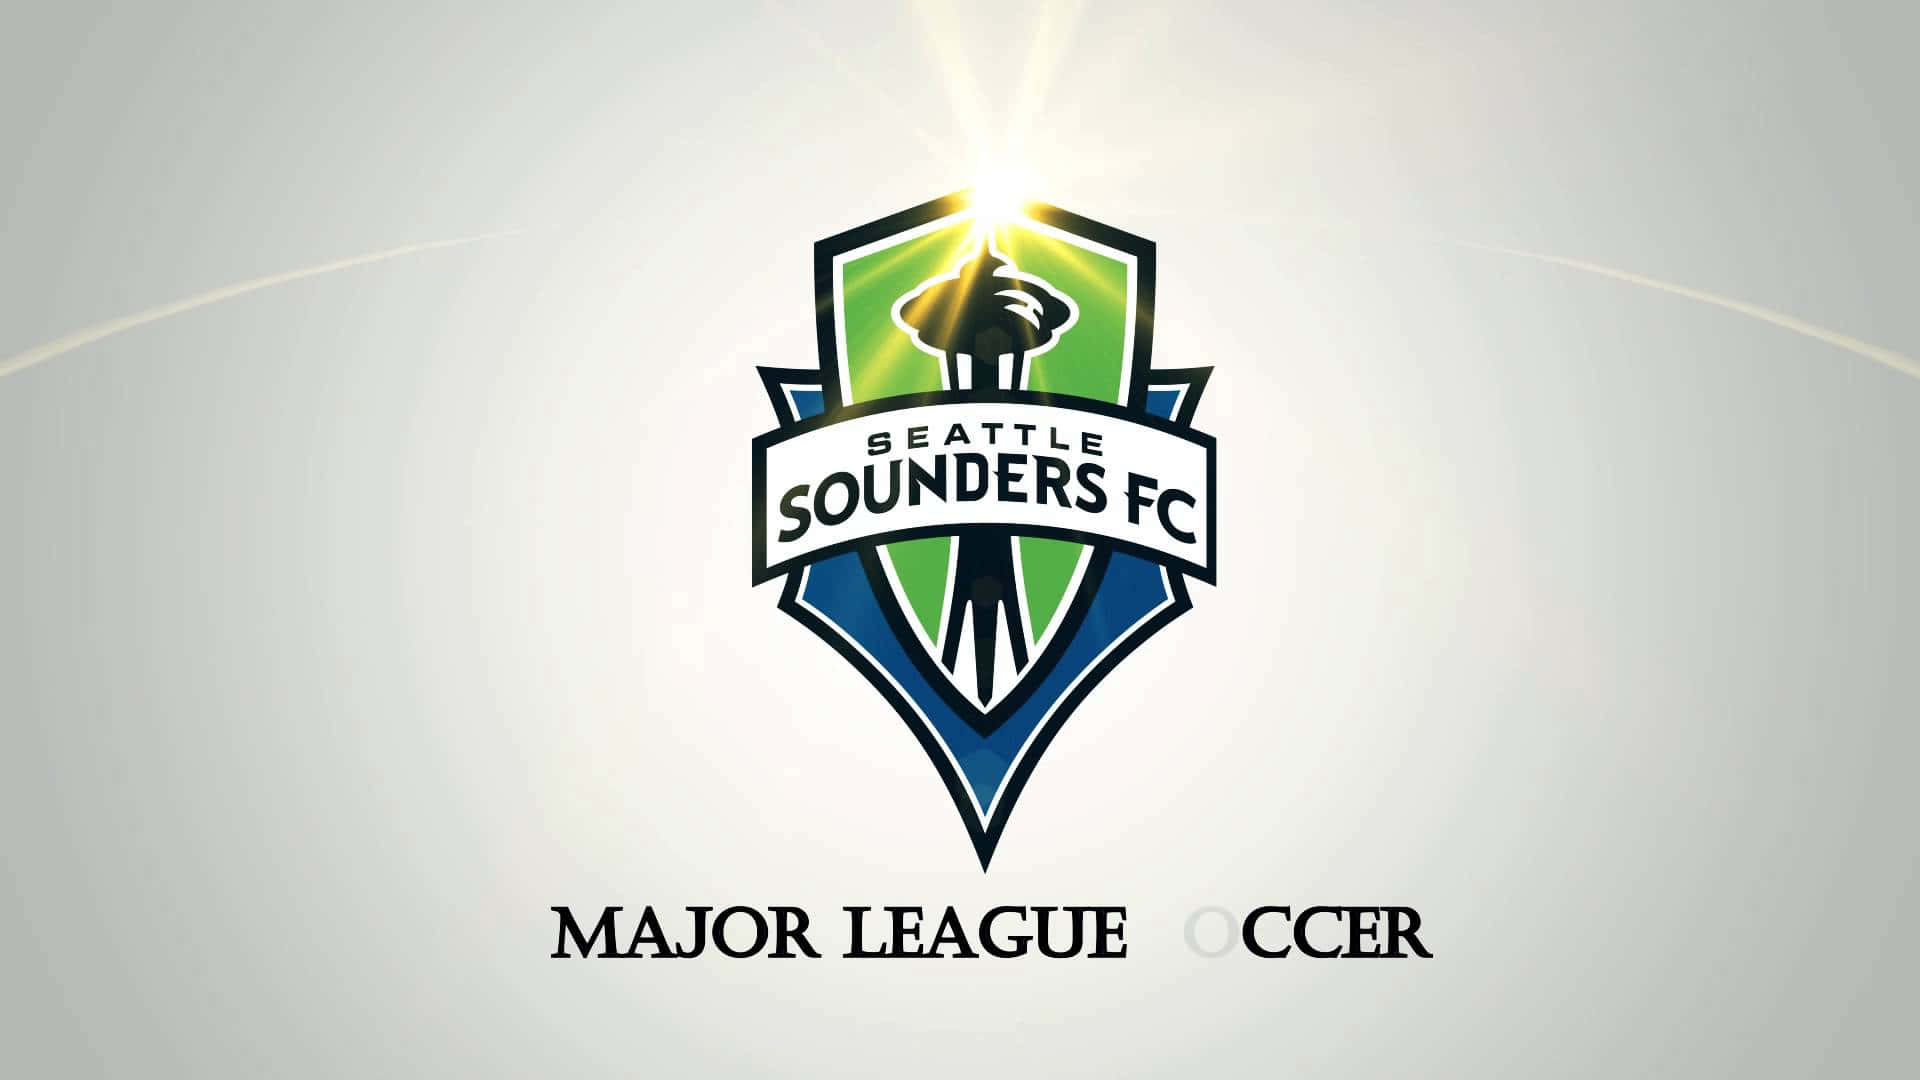 Seattlesounders Fc Major League Soccer - Seattle Sounders Fc Liga Mayor De Fútbol Soccer Fondo de pantalla